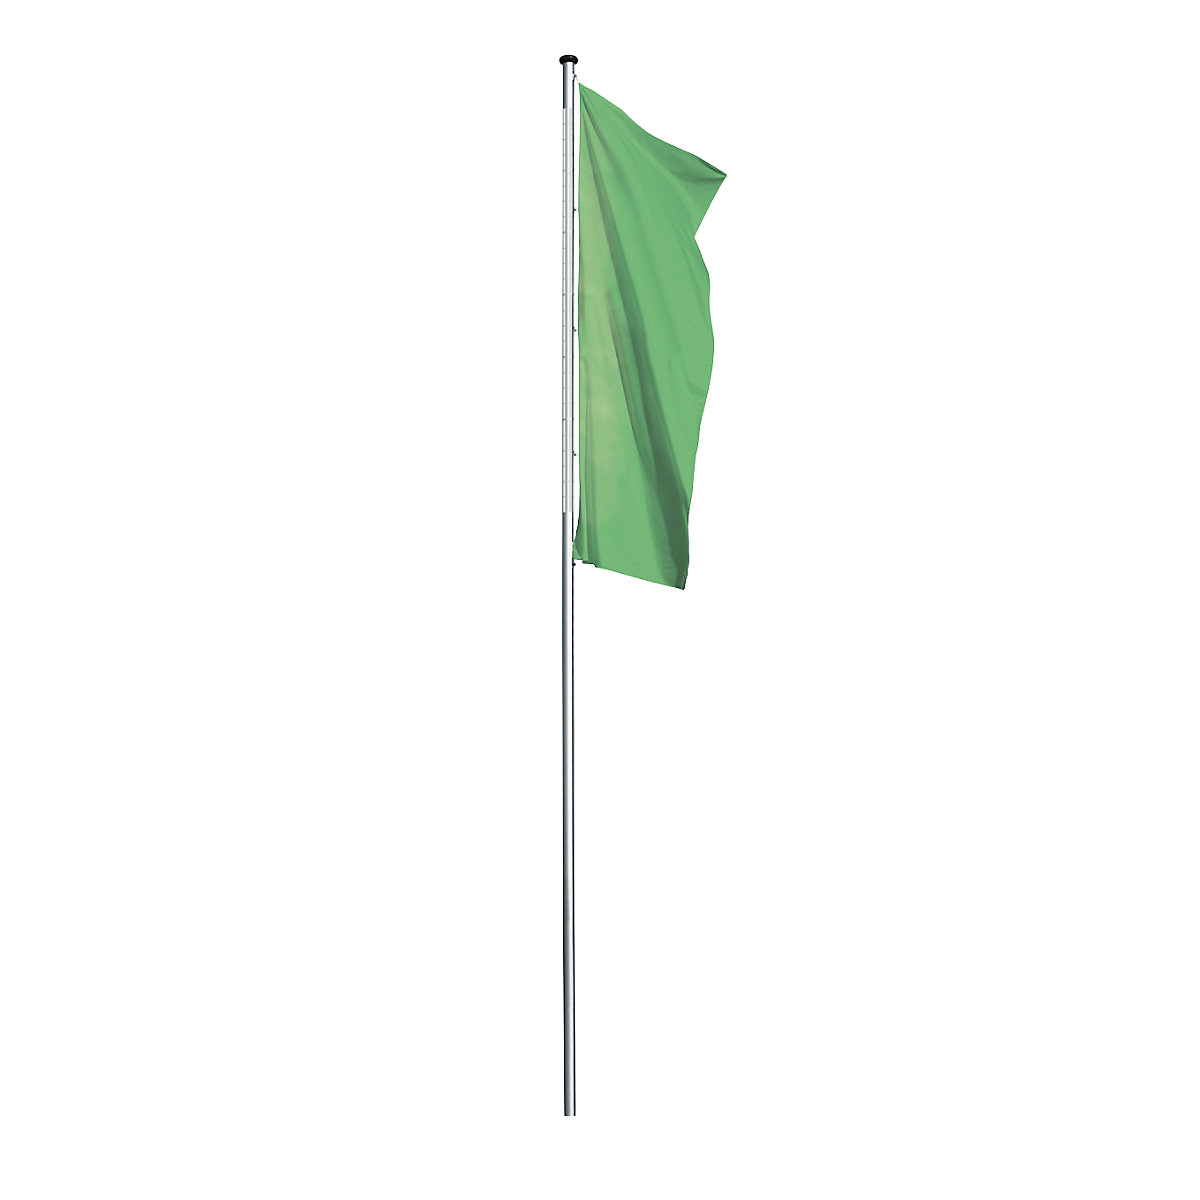 Aluminium flag pole, illuminated – Mannus